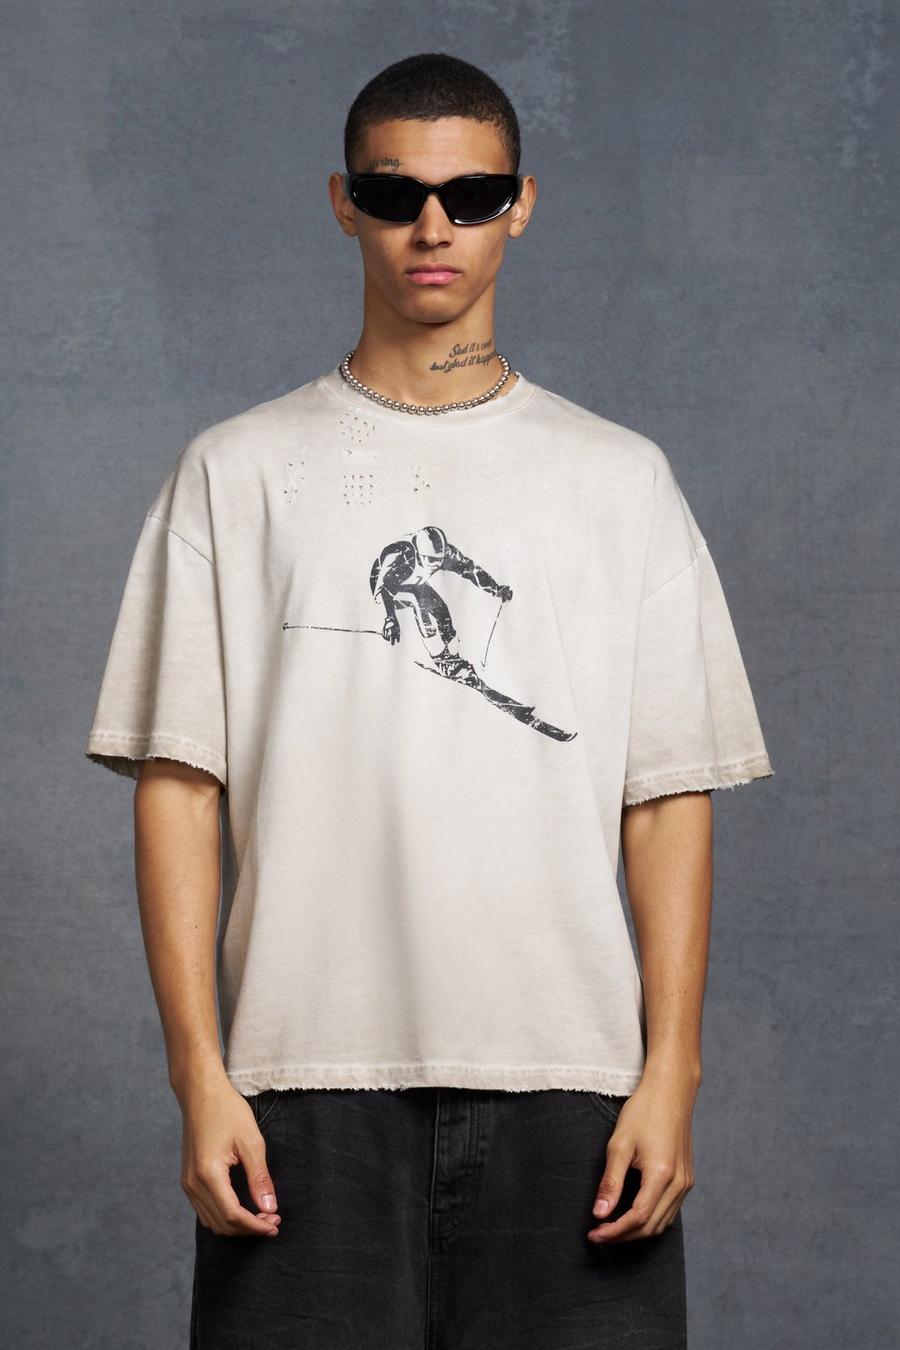 Gunna - T-shirt oversize à imprimé ski, Stone